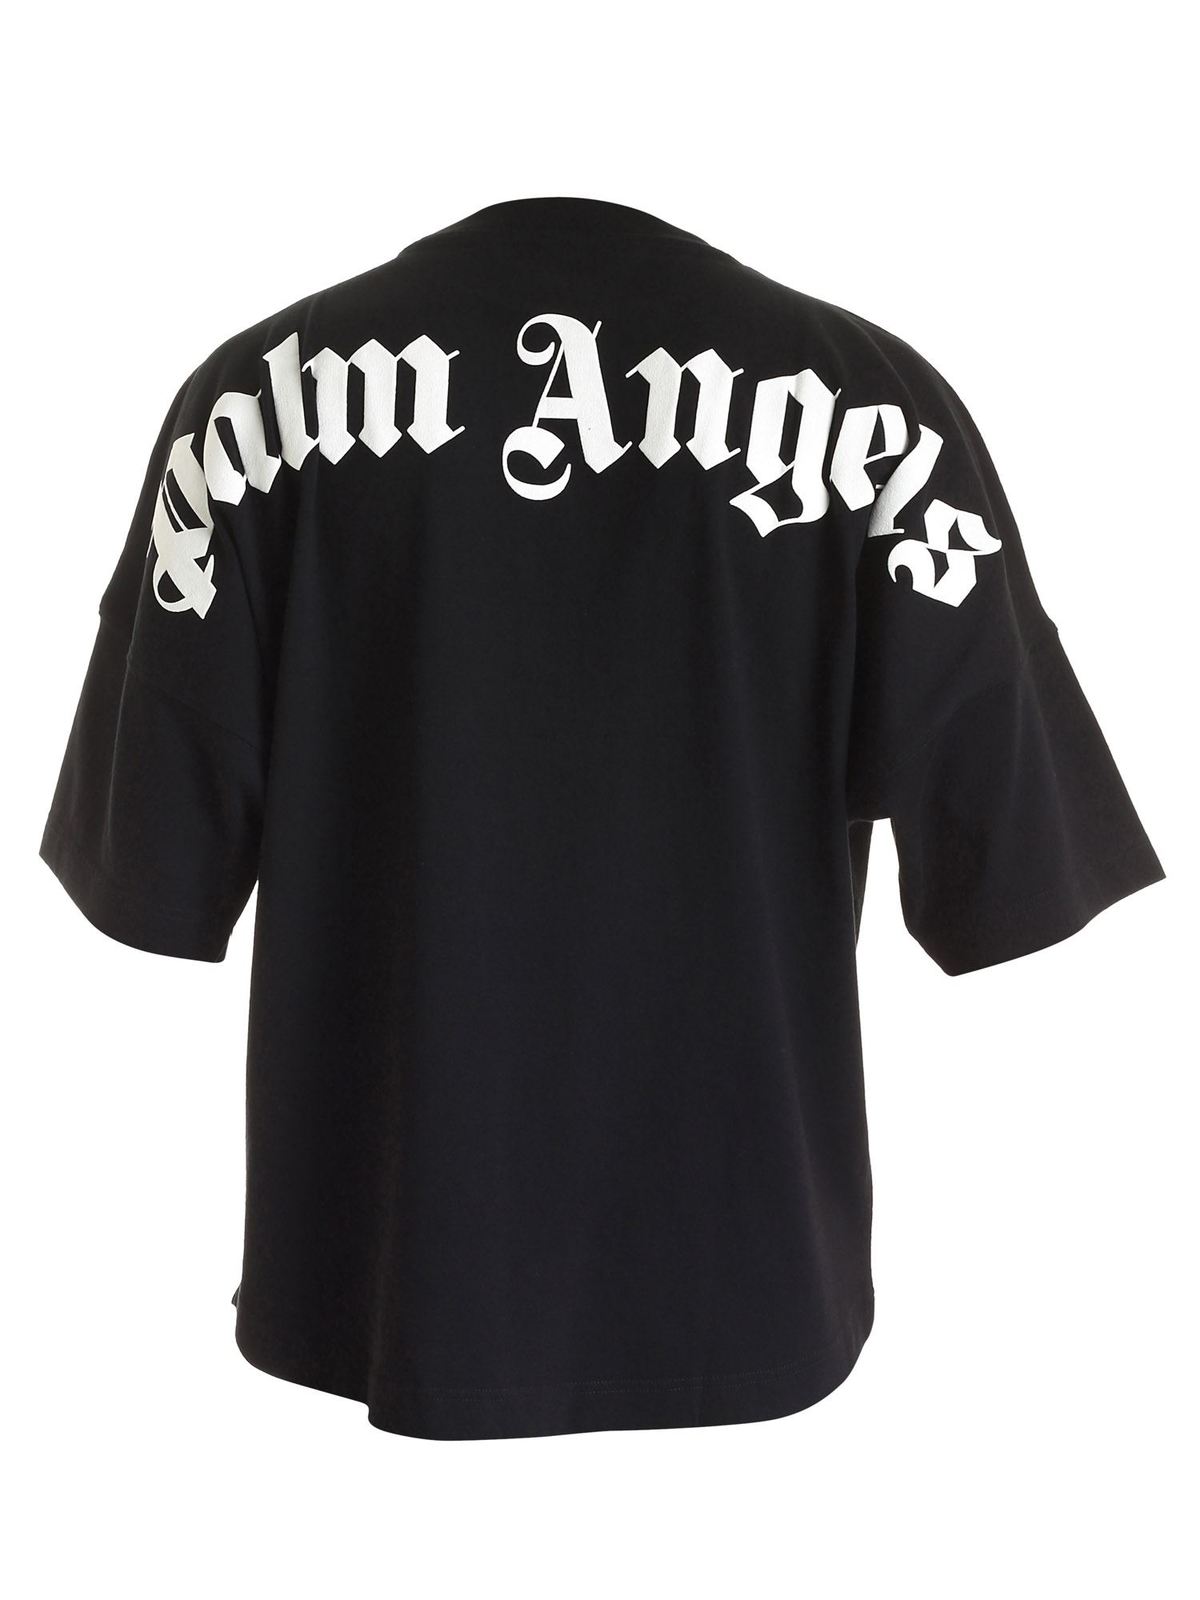 Black Palm Angels Shirt Top Sellers, 56% OFF | campingcanyelles.com